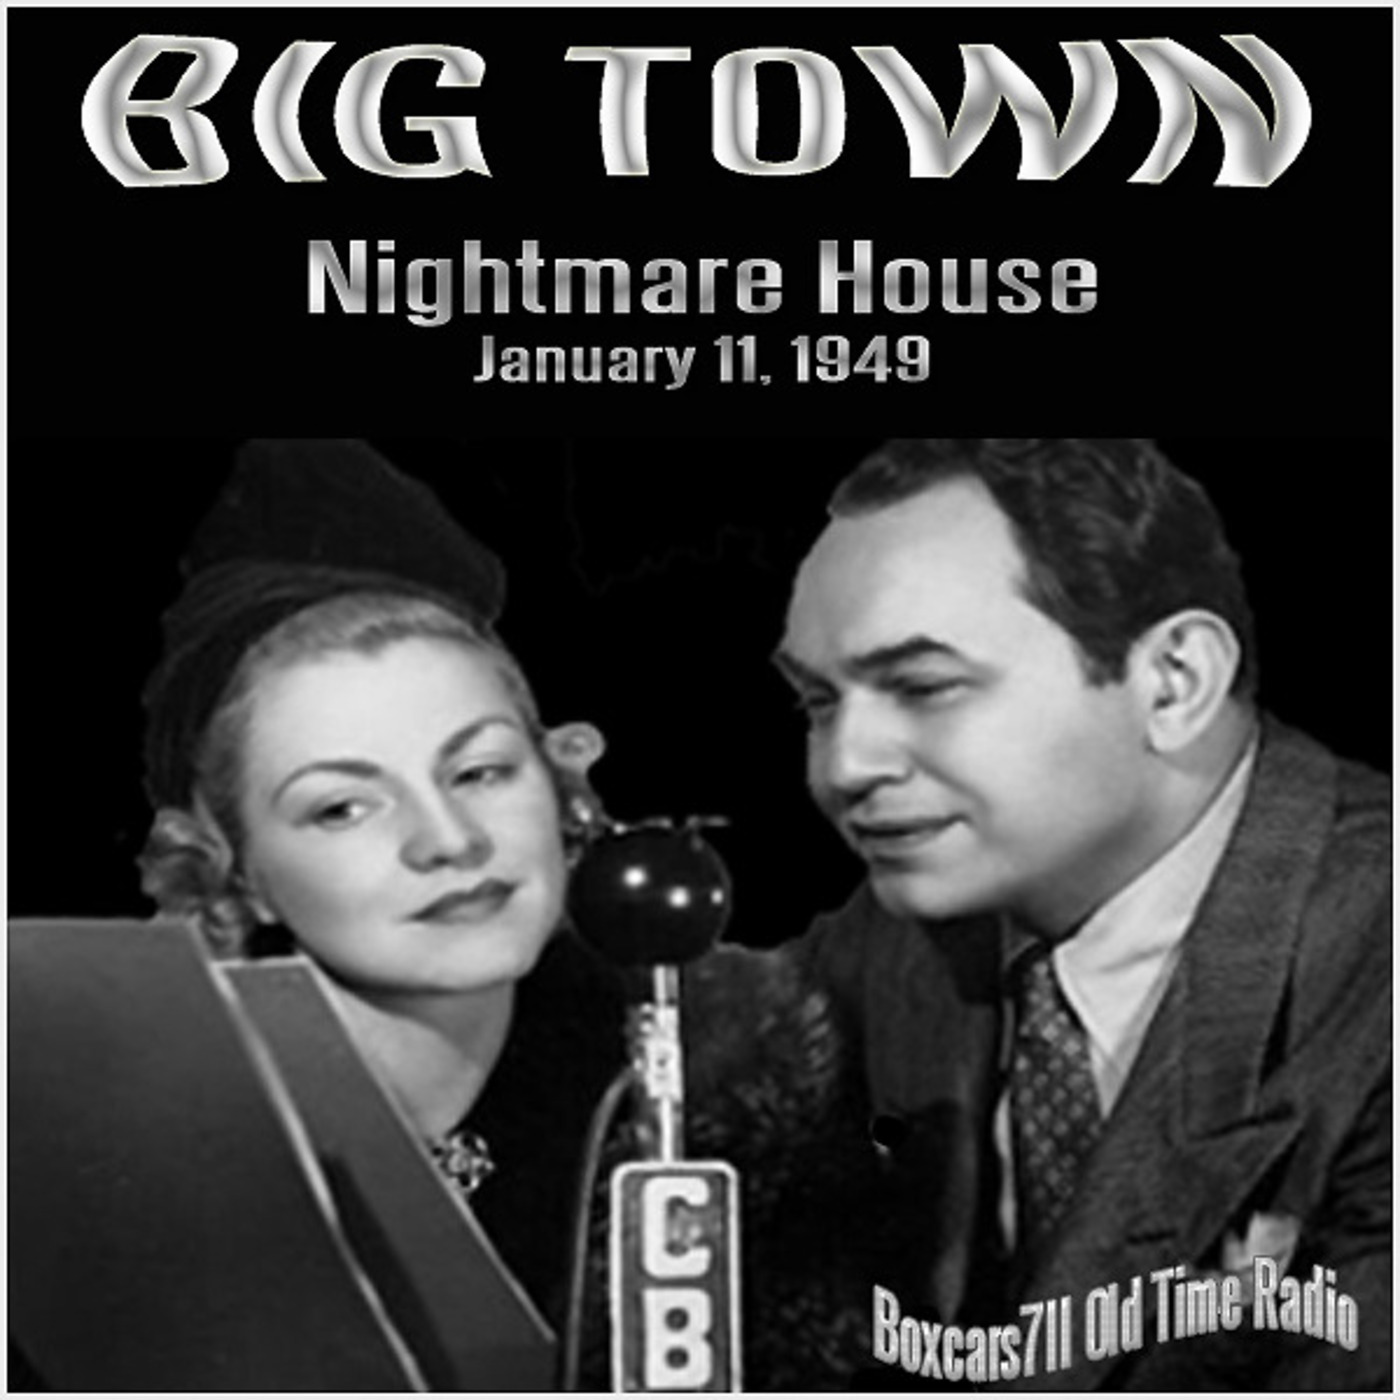 Episode 9581: Big Town - 